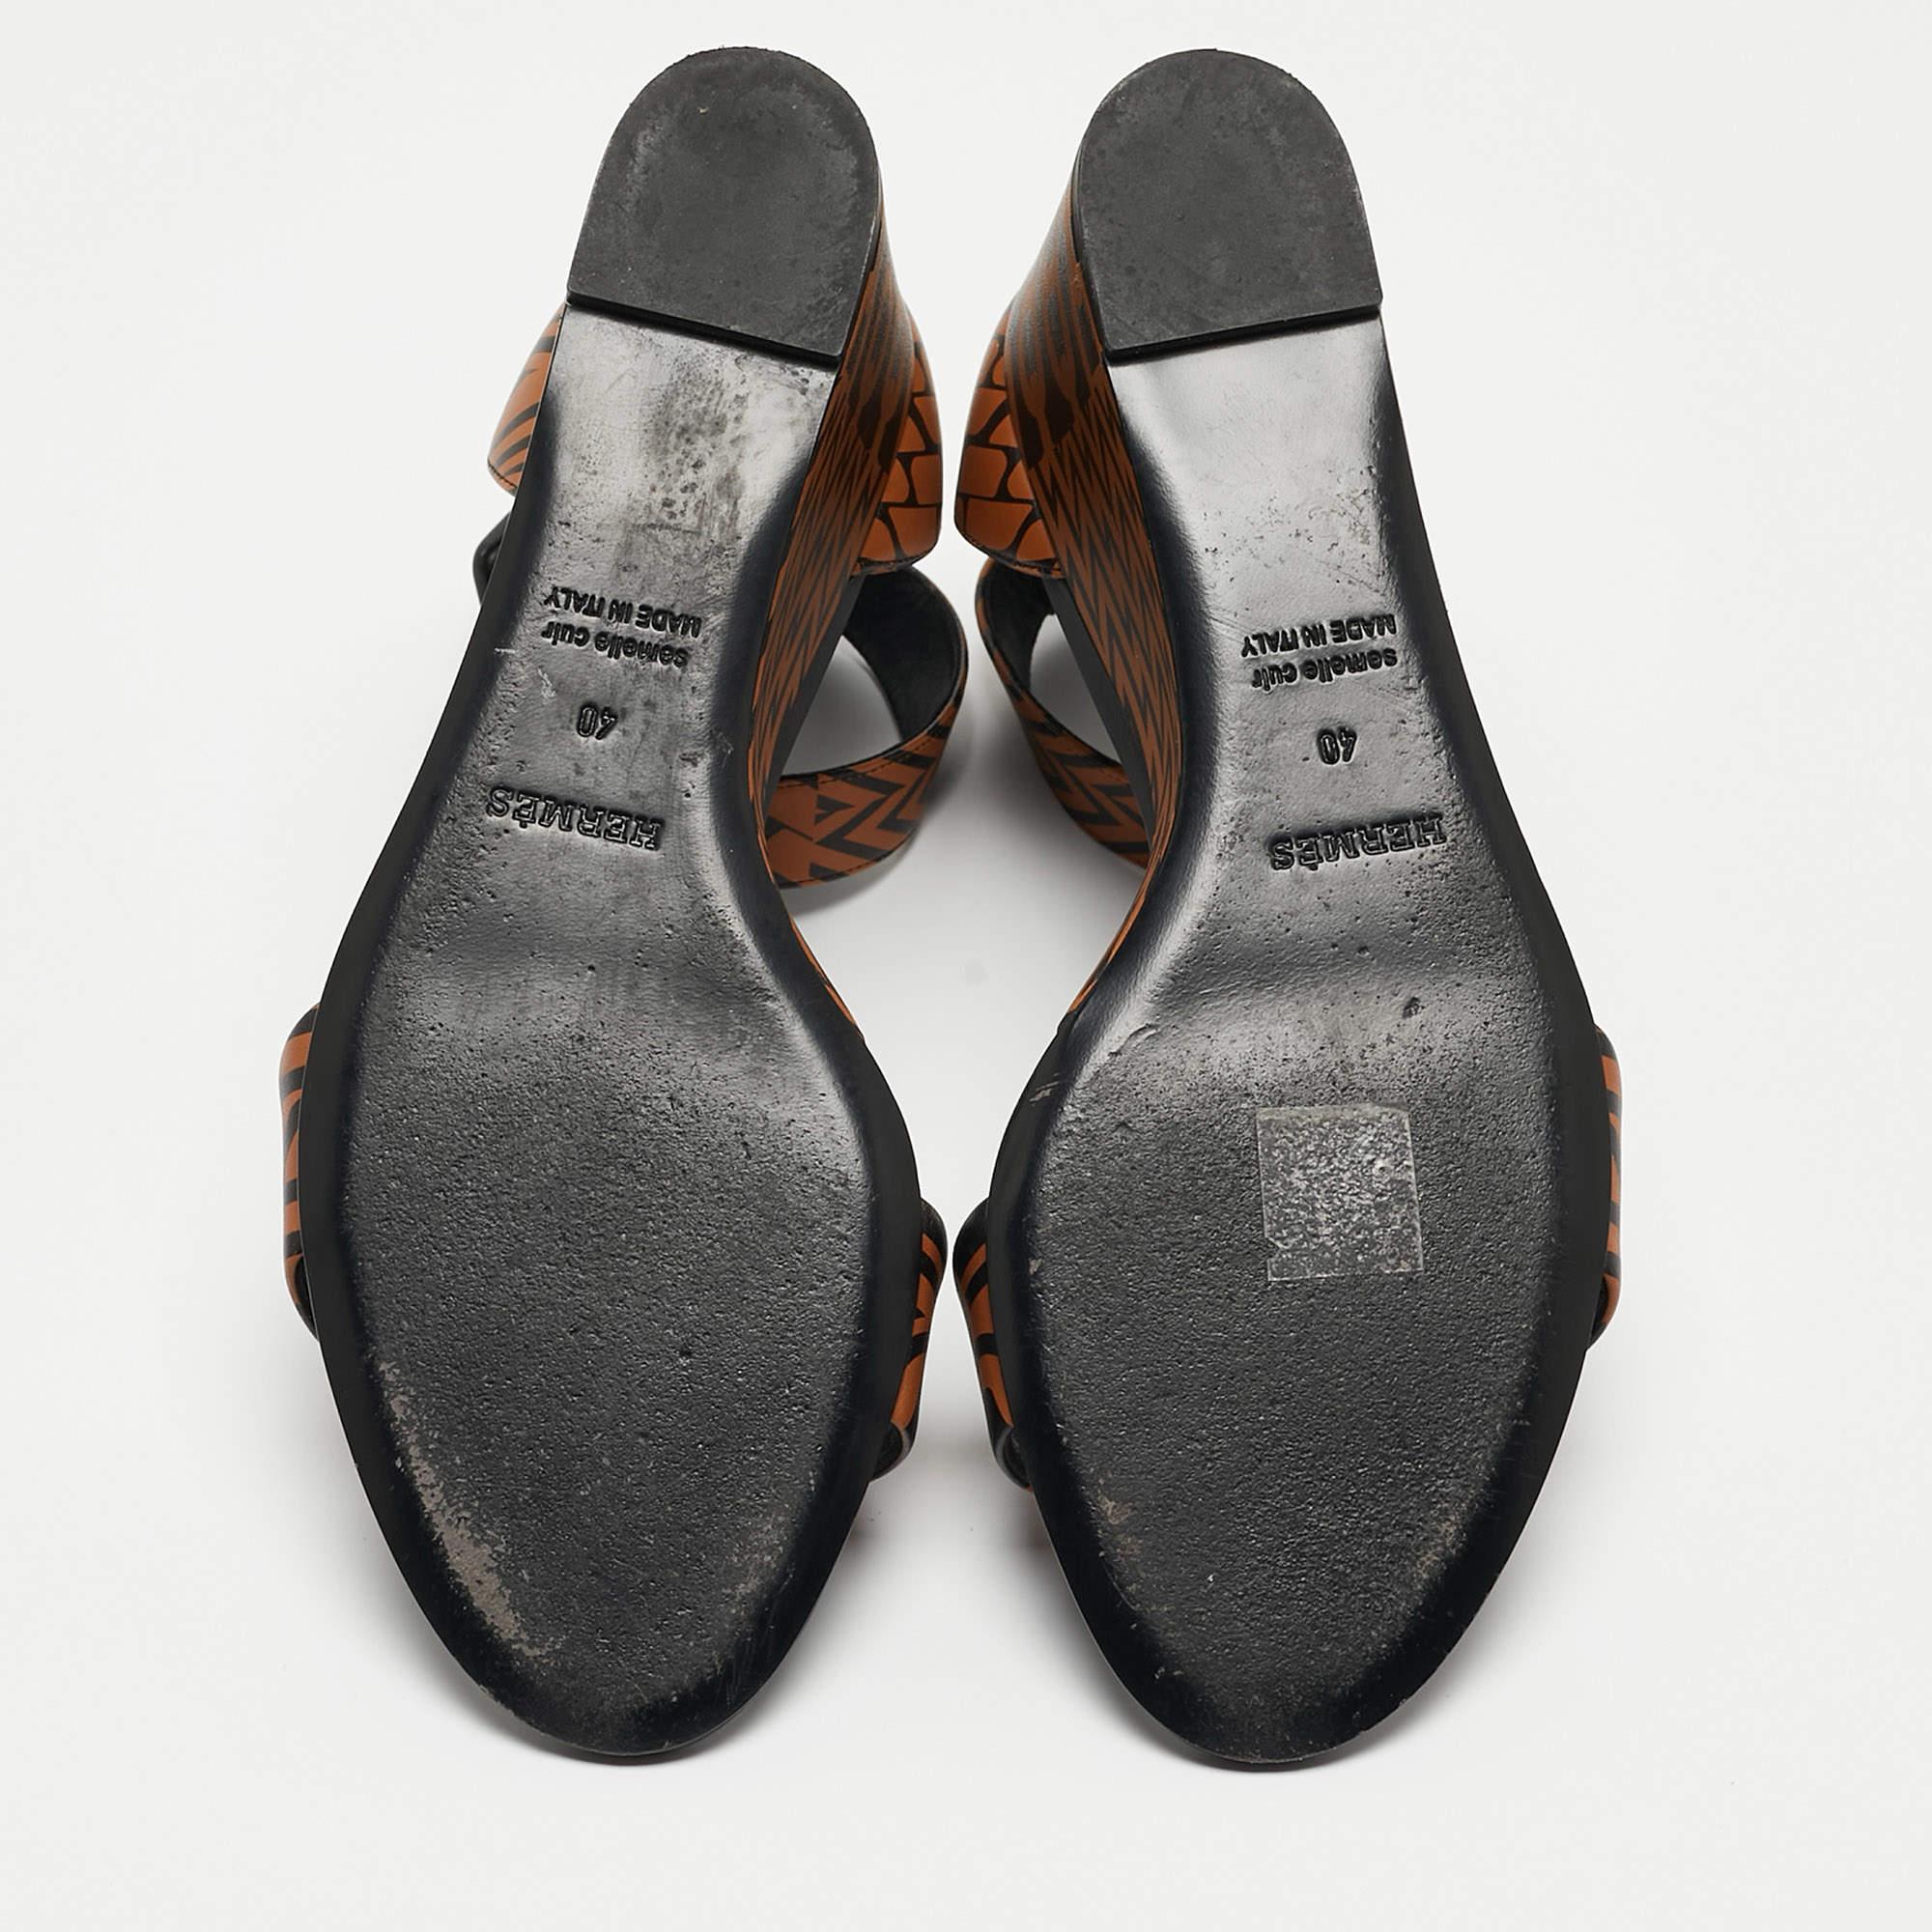 Hermes Black/Brown Printed Leather Acapulco Wedge Sandals Size 40 3